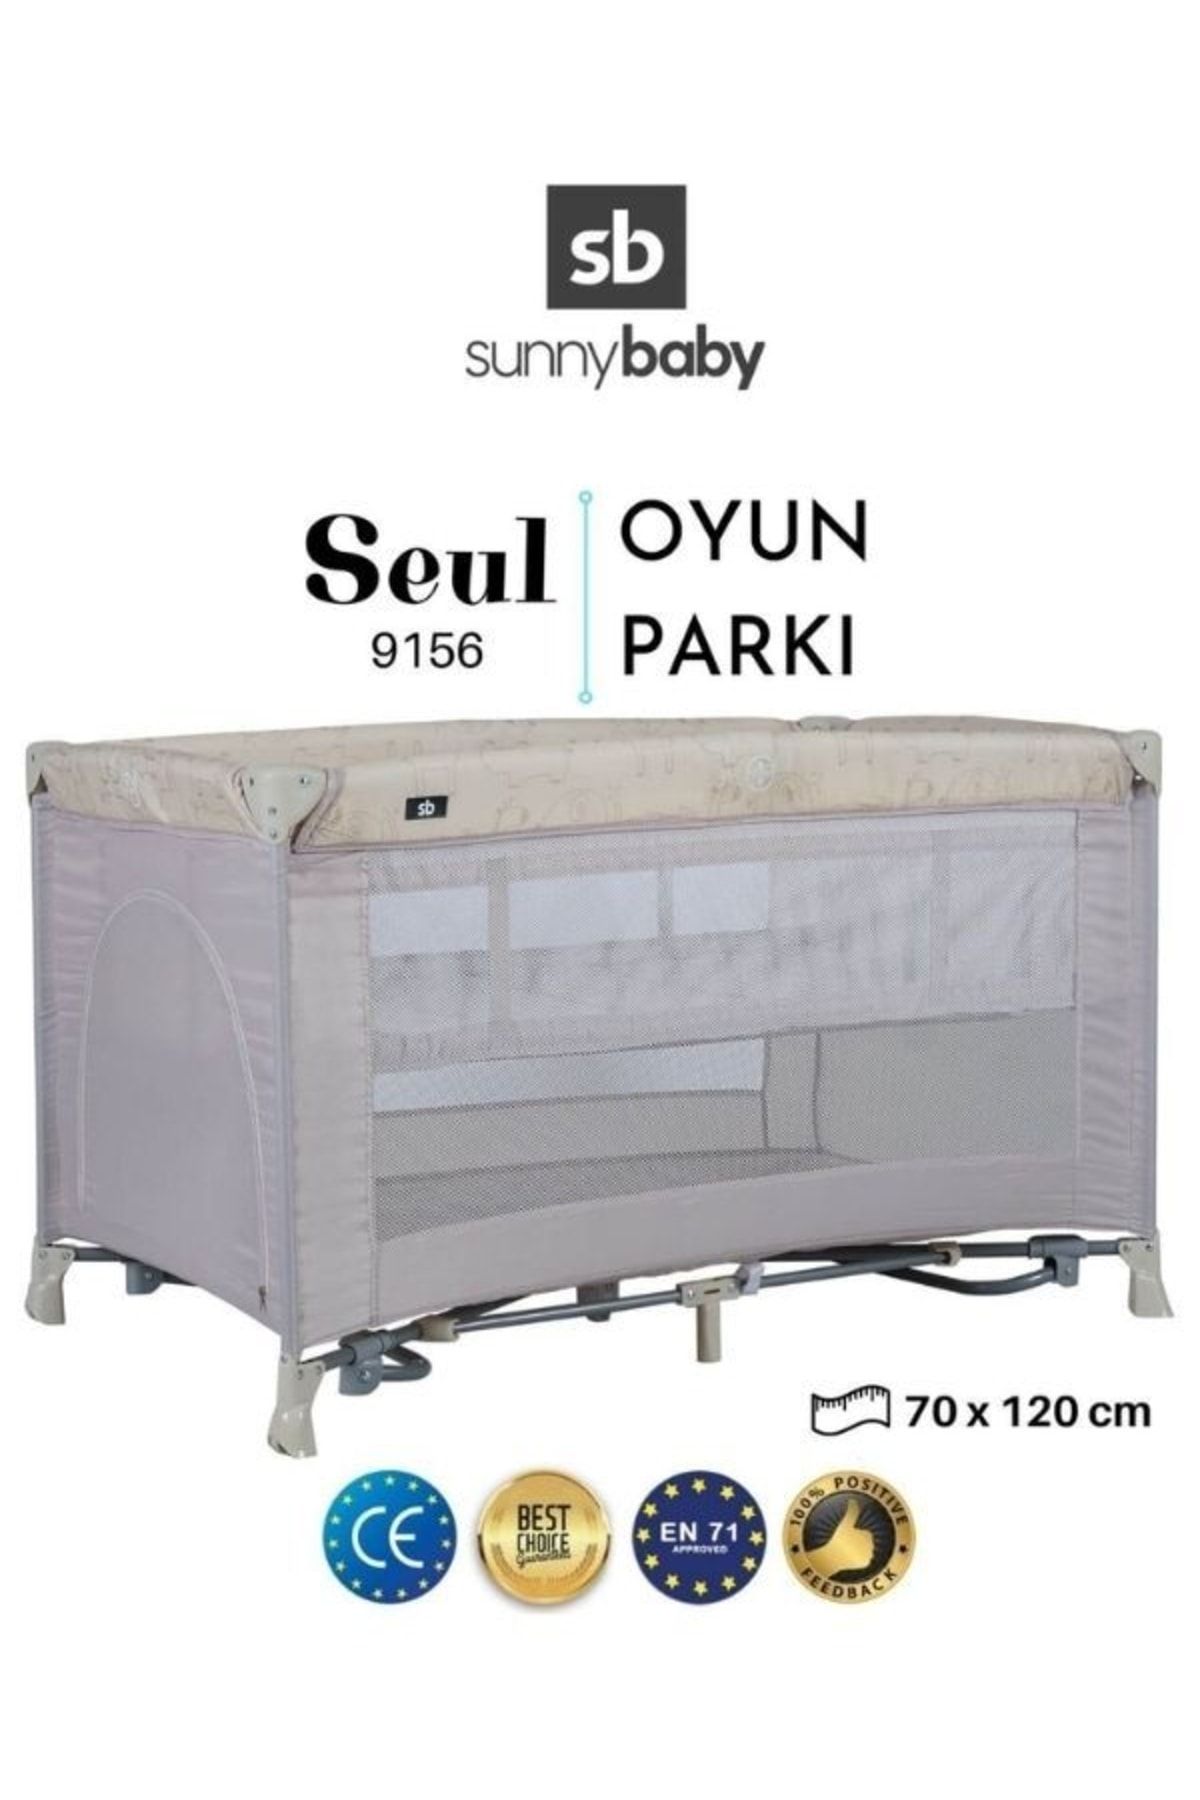 Sunny Baby 9156 Seul Oyun Parkı 70x120 Cm Bej